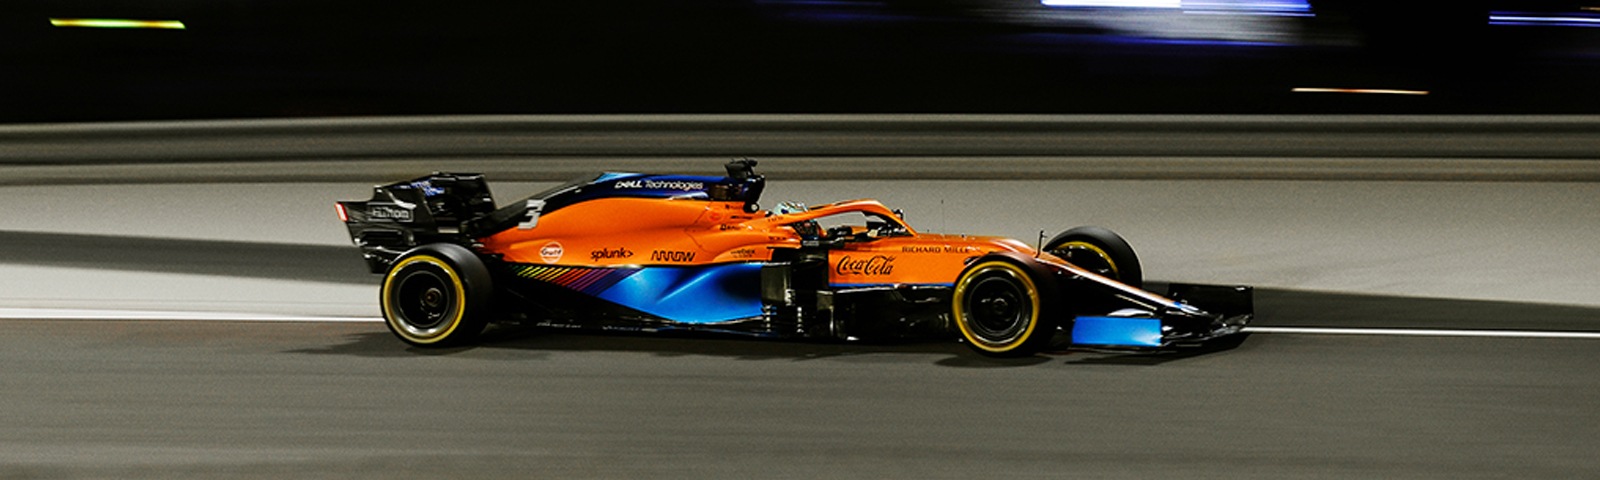 Webex powers the McLaren Formula 1 Team